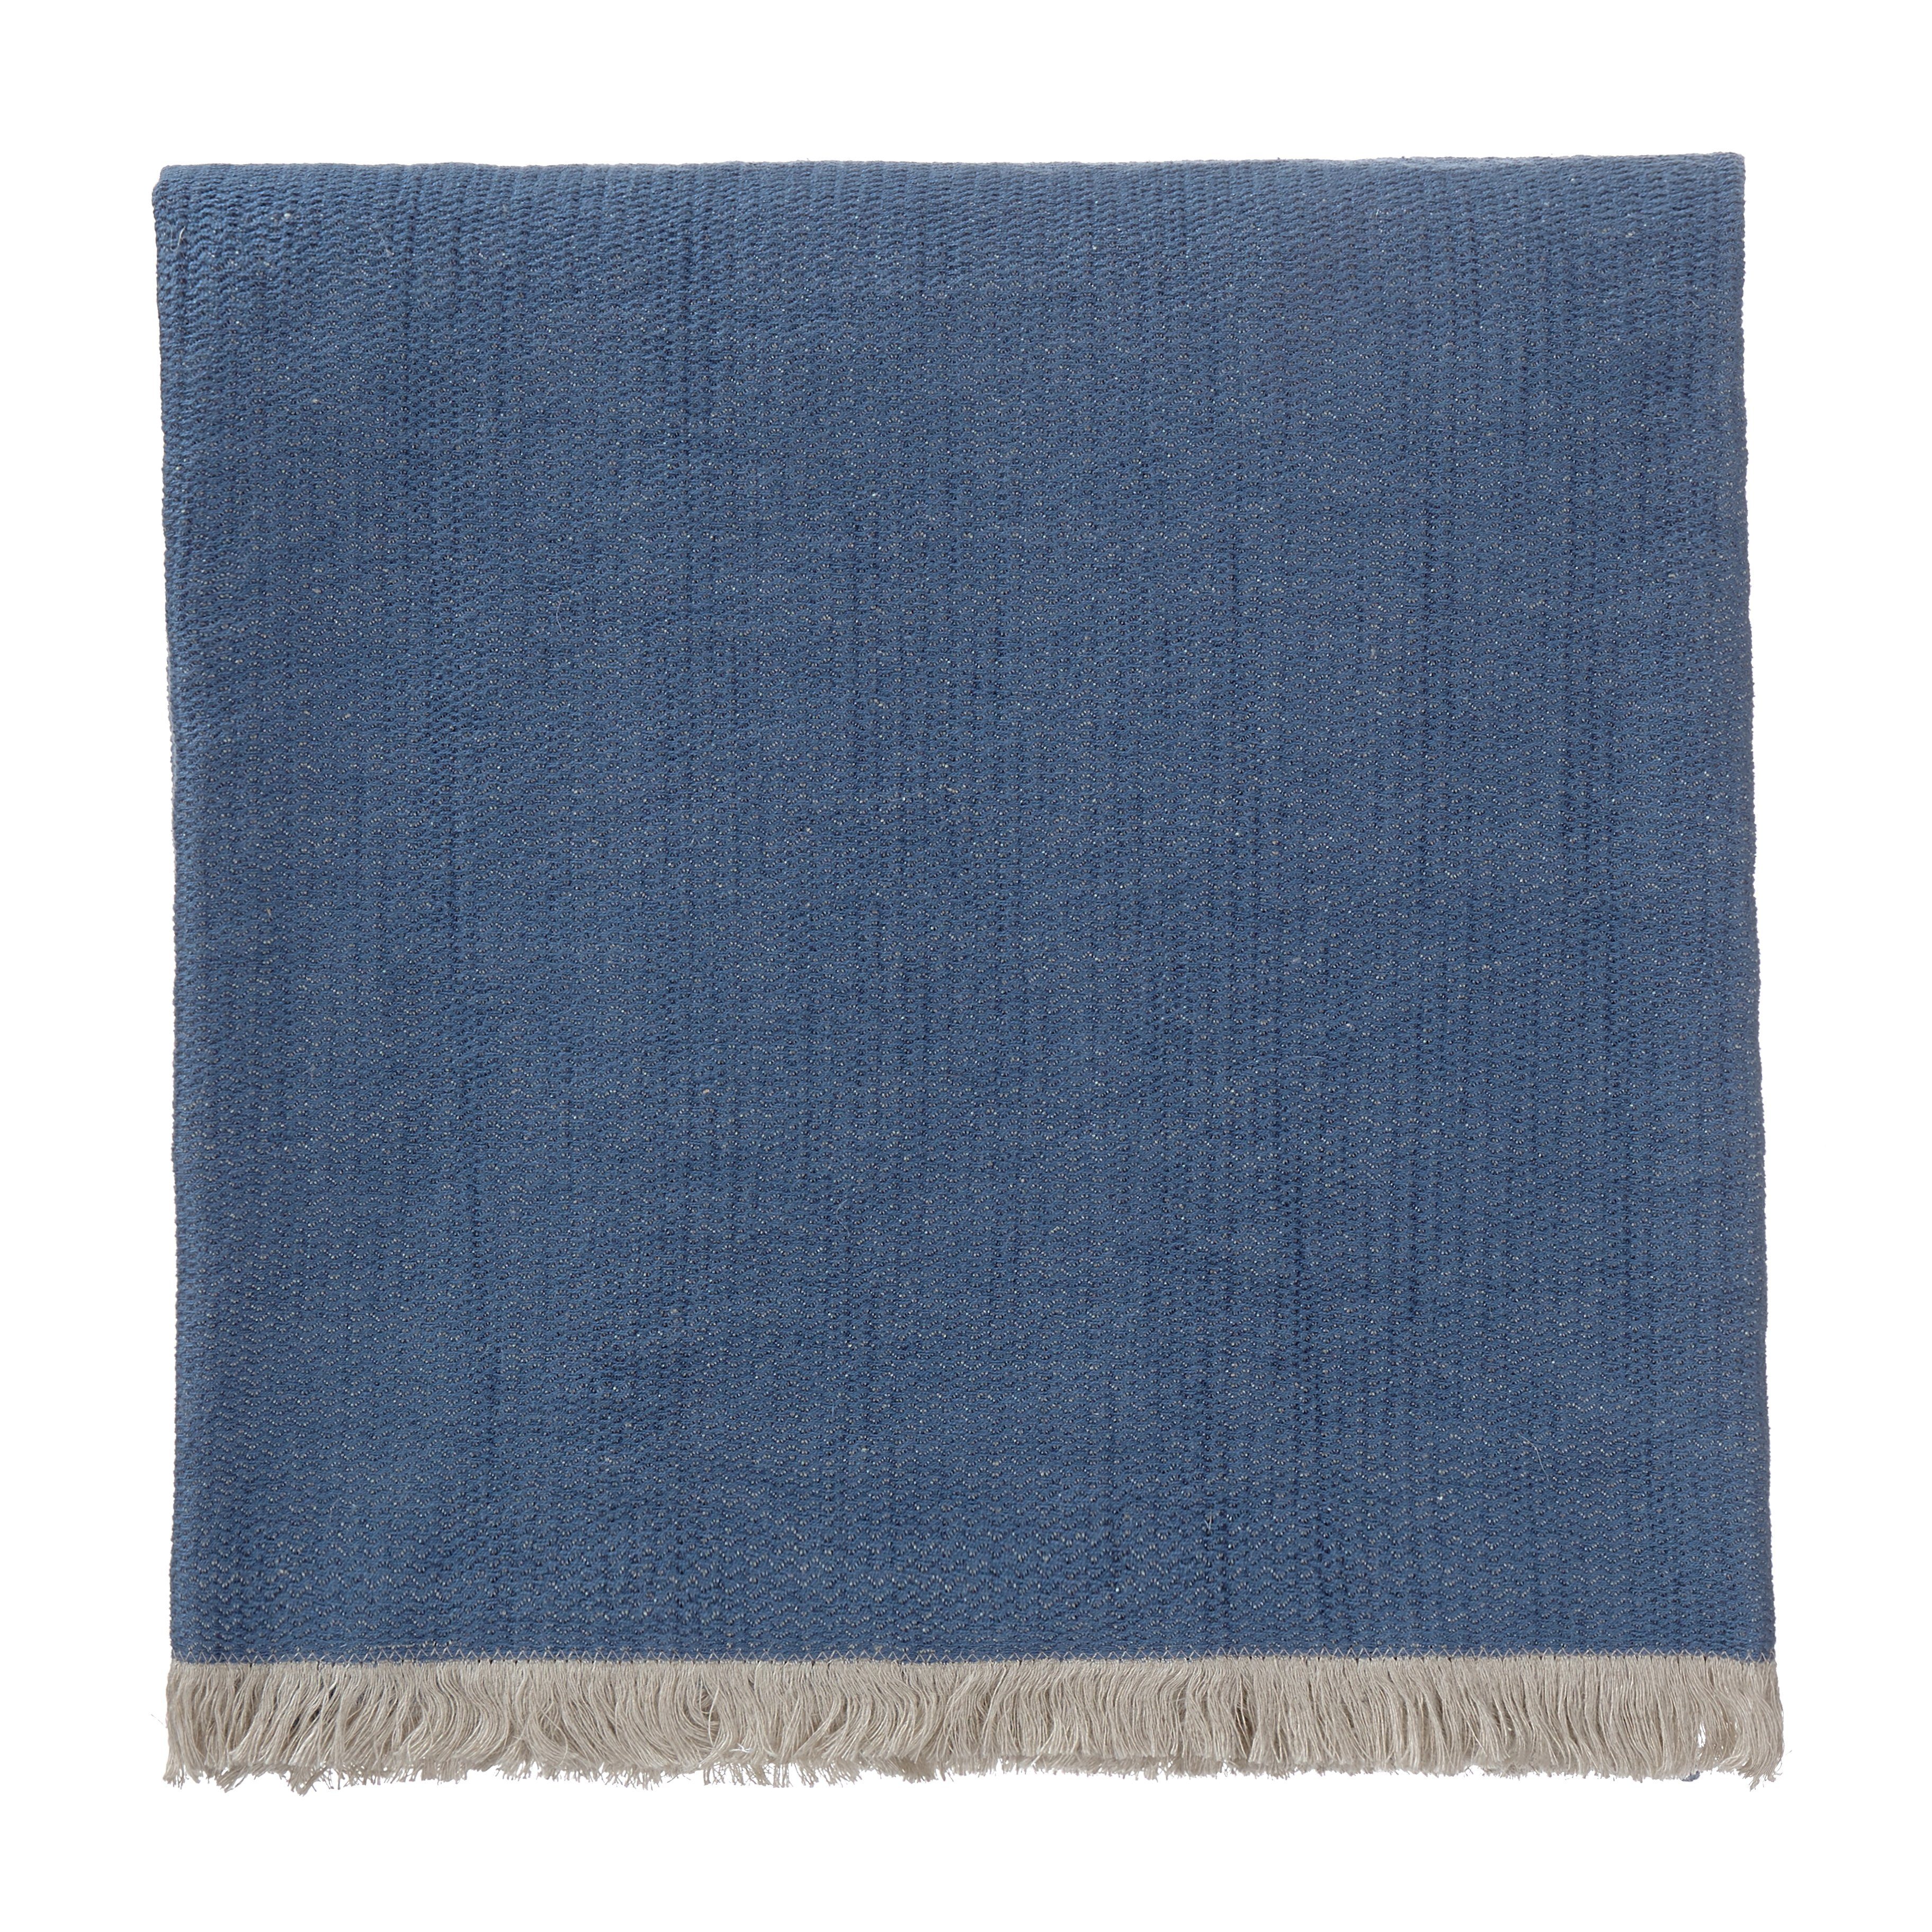 Wohndecke Decke - Alkas - Jeansblau & Steingrau - 130x160 cm, Urbanara, Wendedecke aus 50% Leinen & 50% Baumwolle